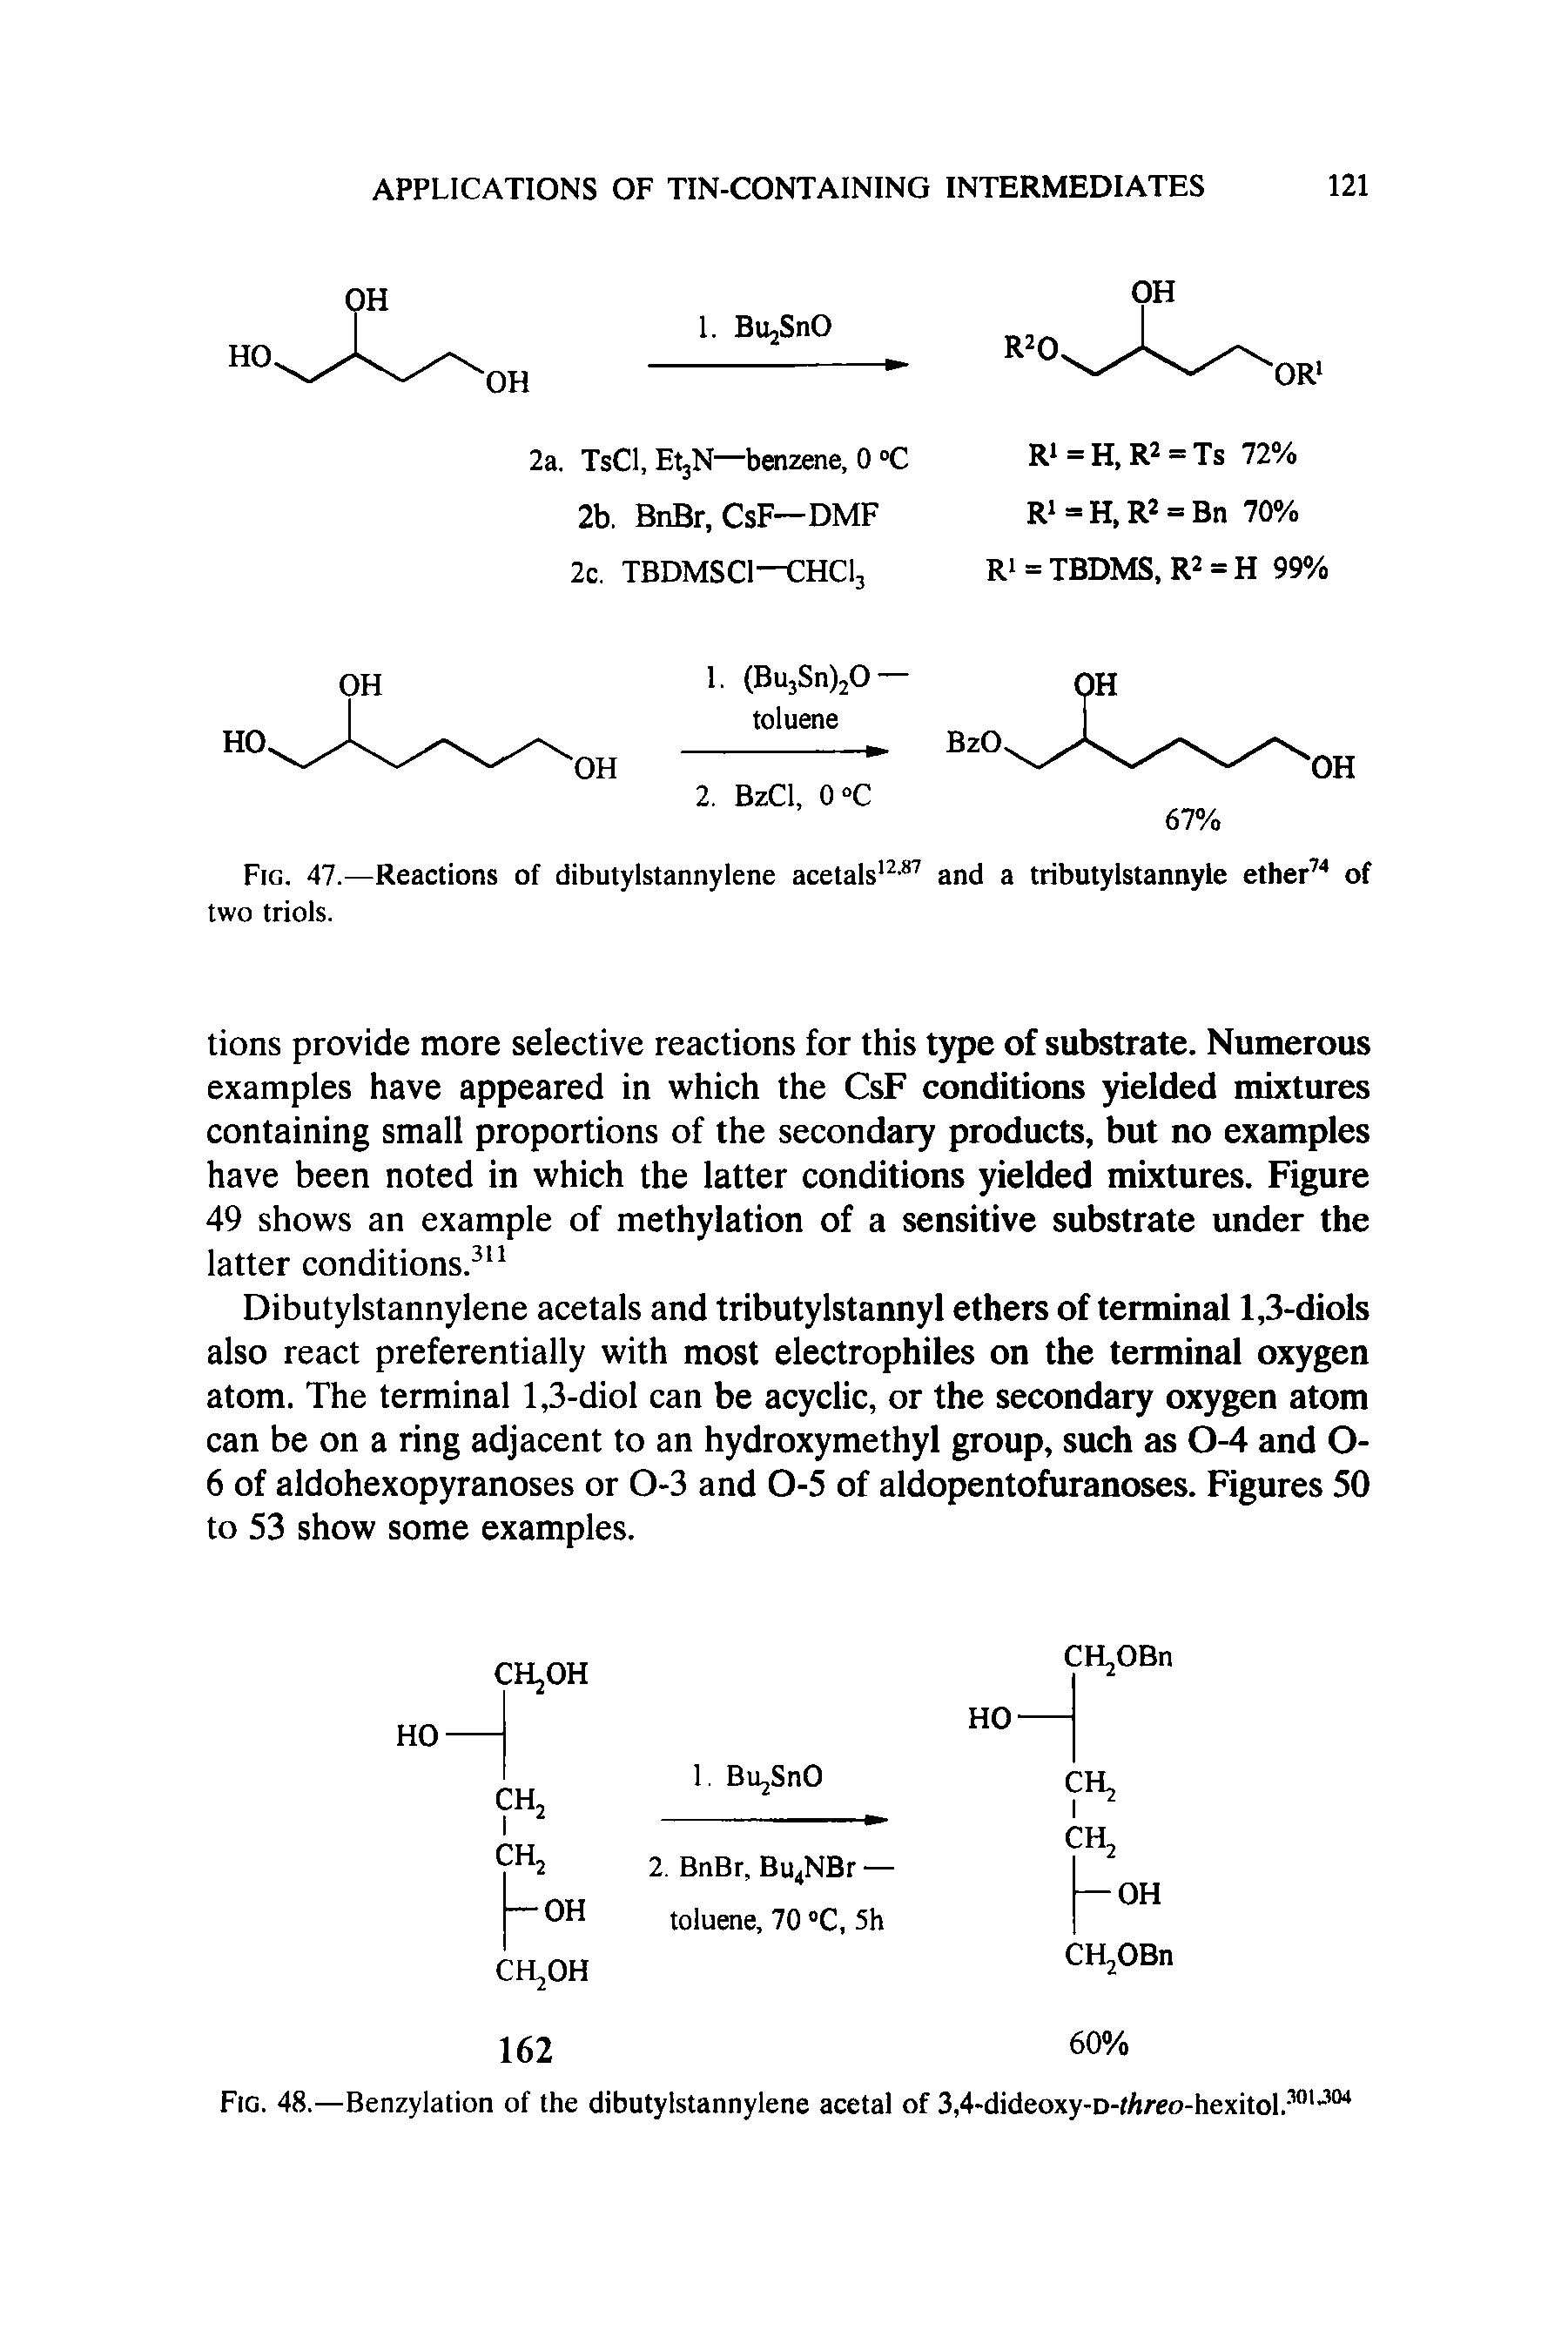 Fig. 48.—Benzylation of the dibutylstannylene acetal of 3,4-dideoxy-D-(fireo-hexitol.-,0U04...